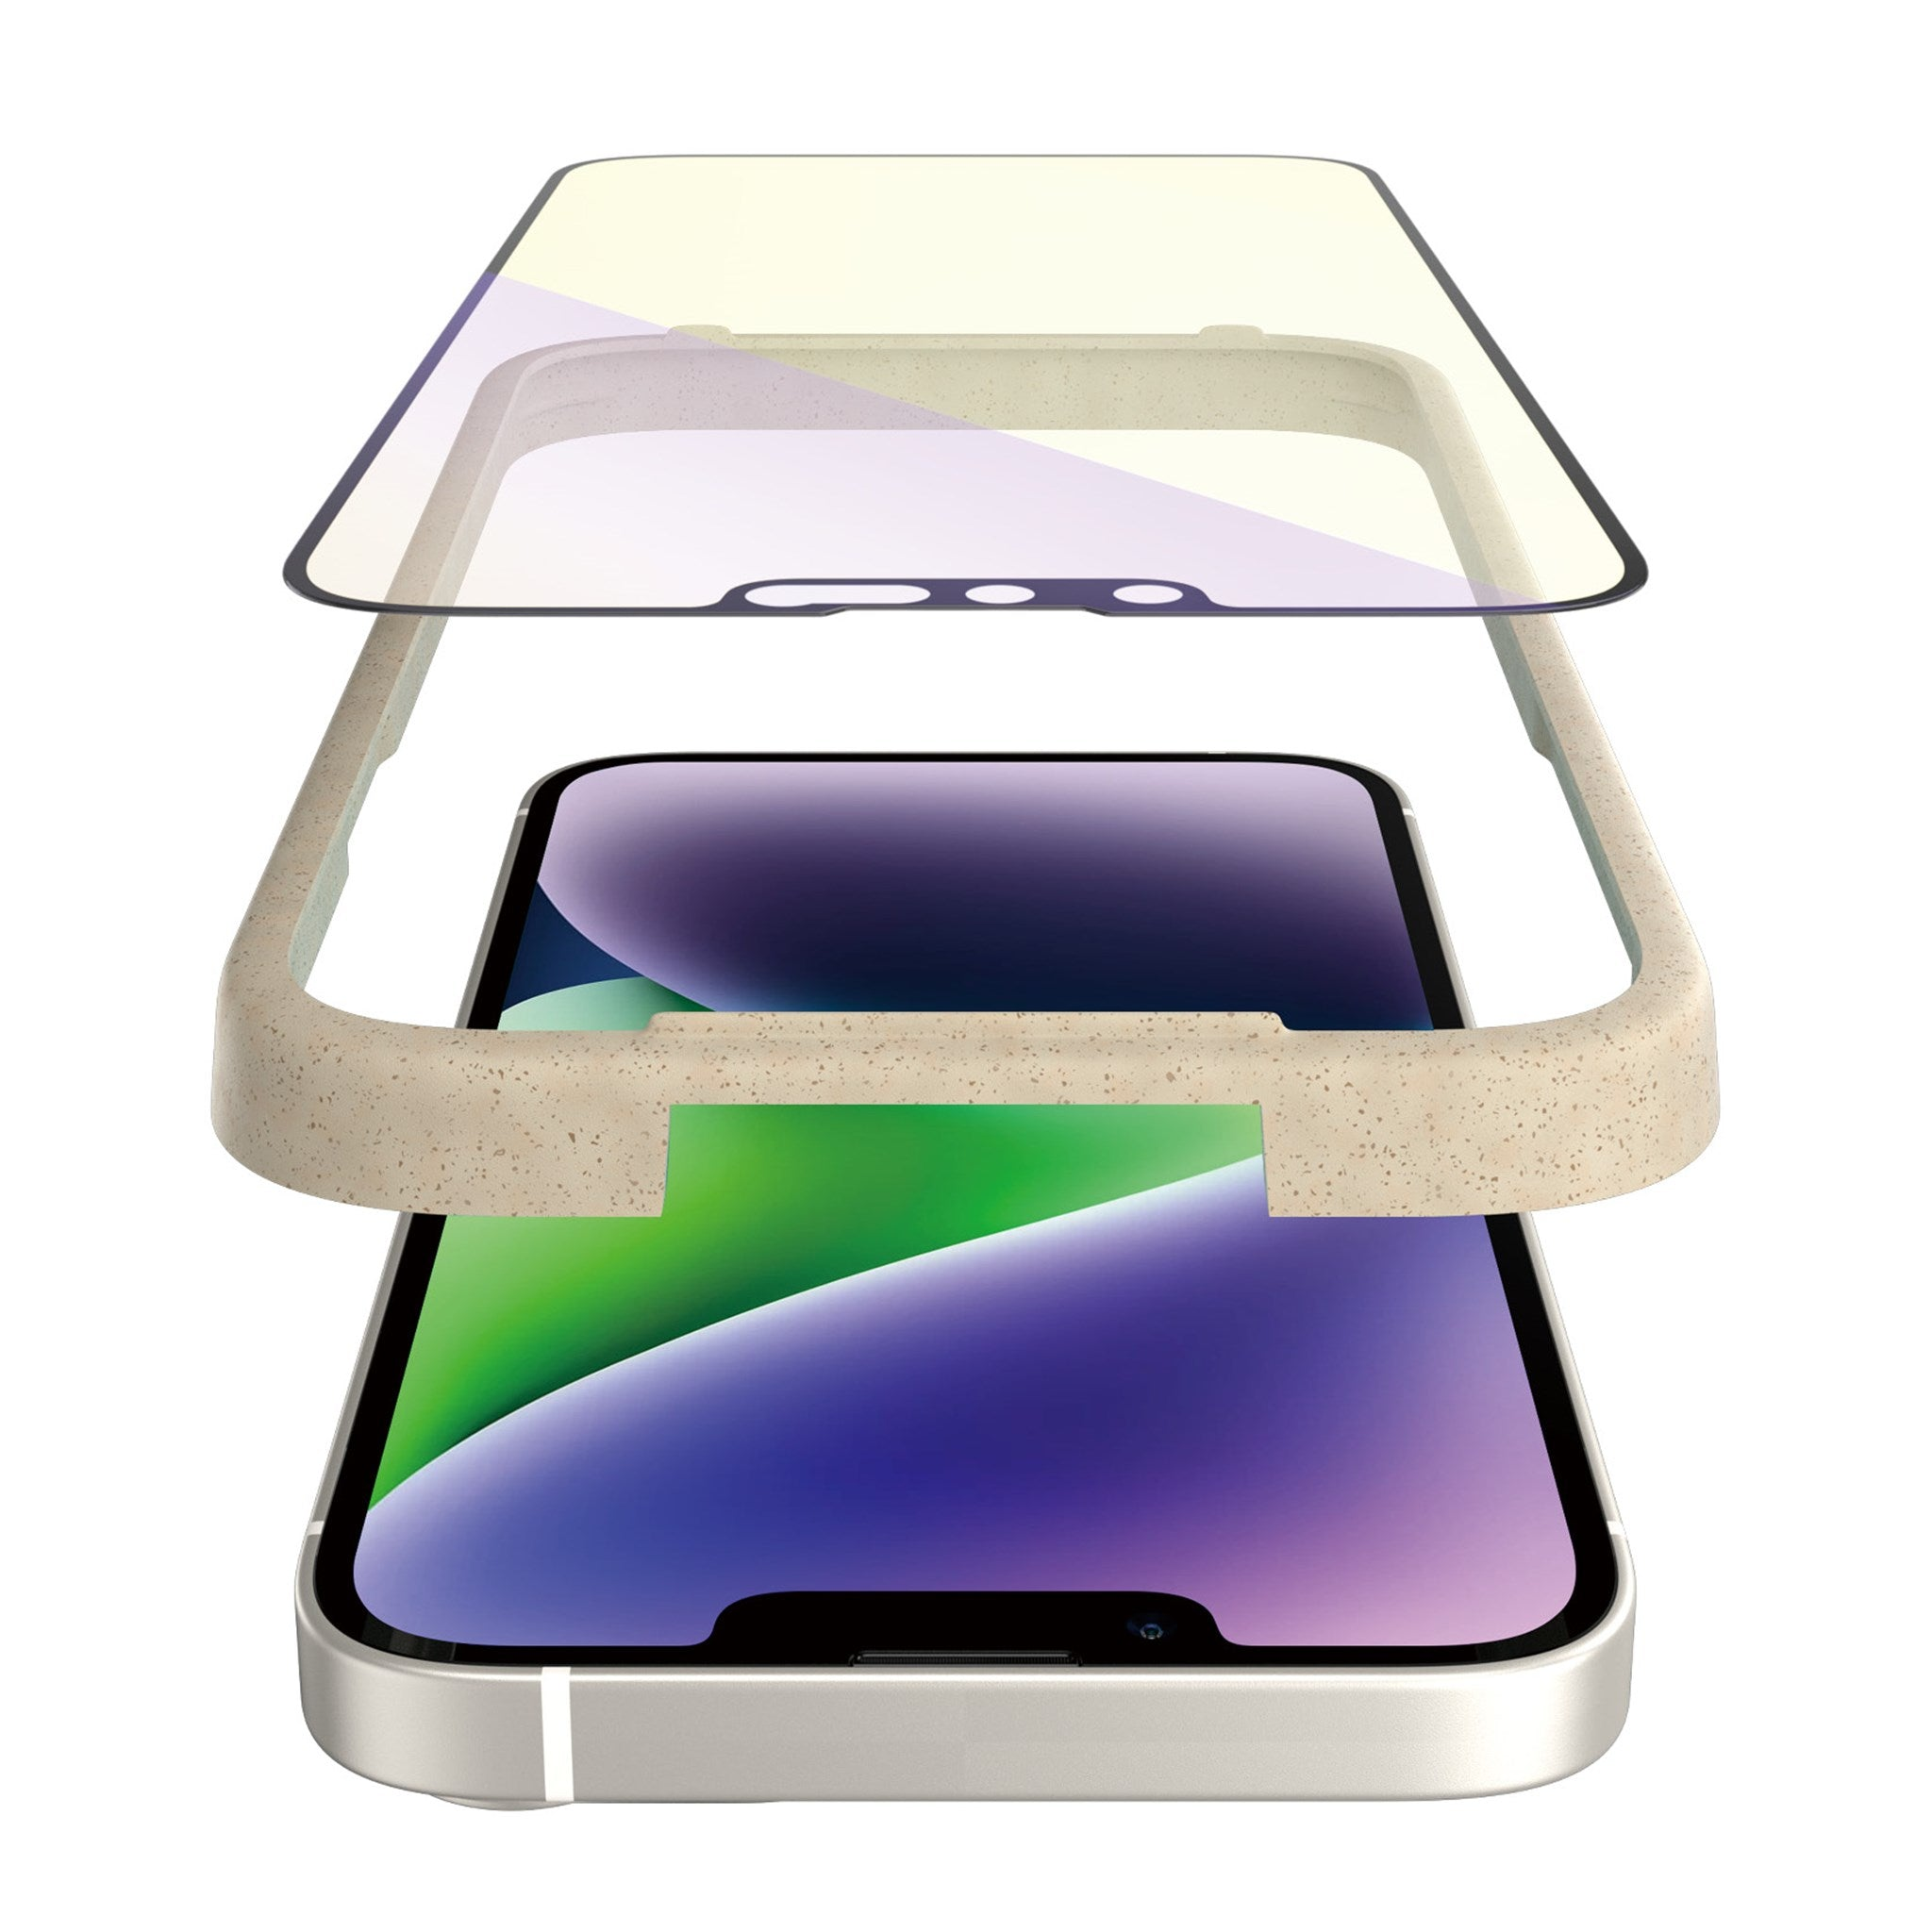 Apple Pro iPhone PANZERGLASS iPhone Max) 13 Displayschutz(für | 14 Plus Fit Ultra-Wide